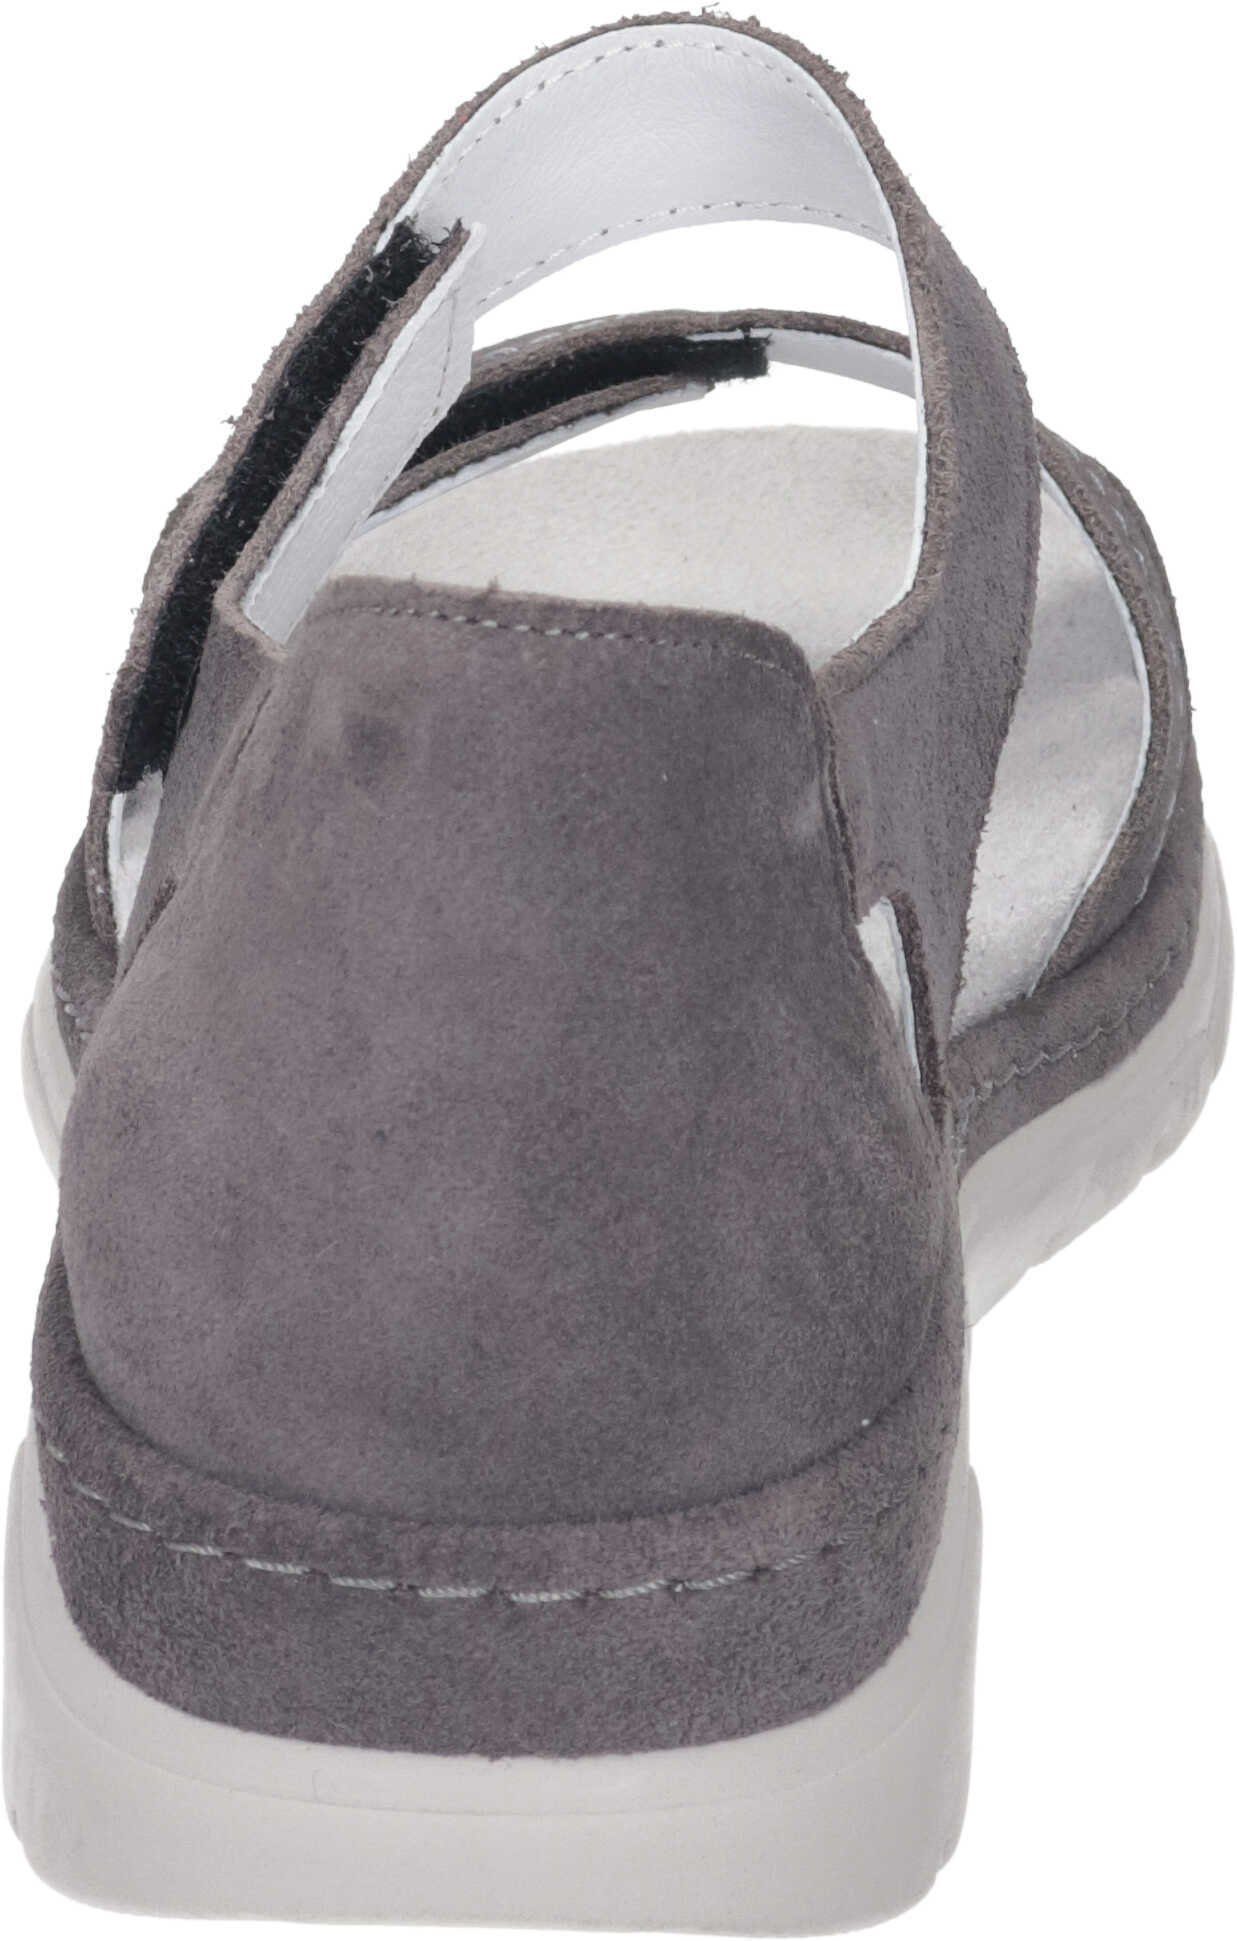 Suave Sandalen Sandalette mit Gummizug